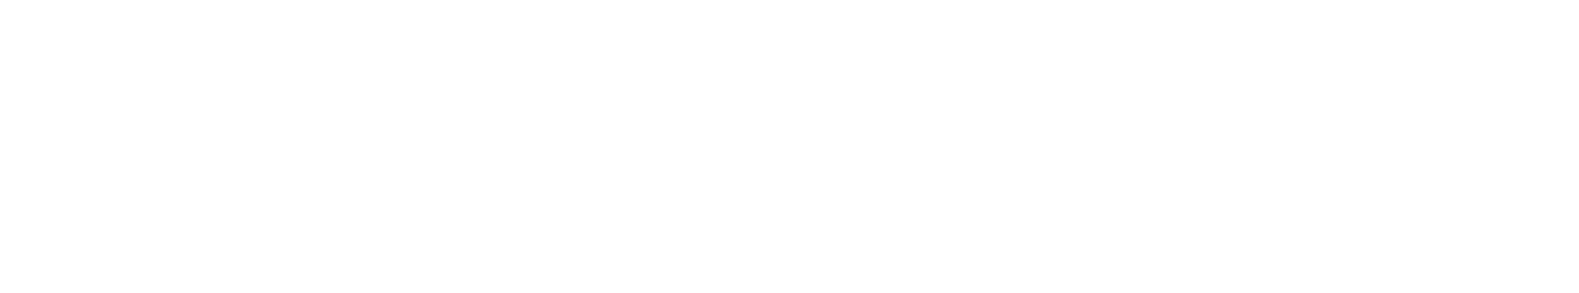 Singapore Land Logo groß für dunkle Hintergründe (transparentes PNG)